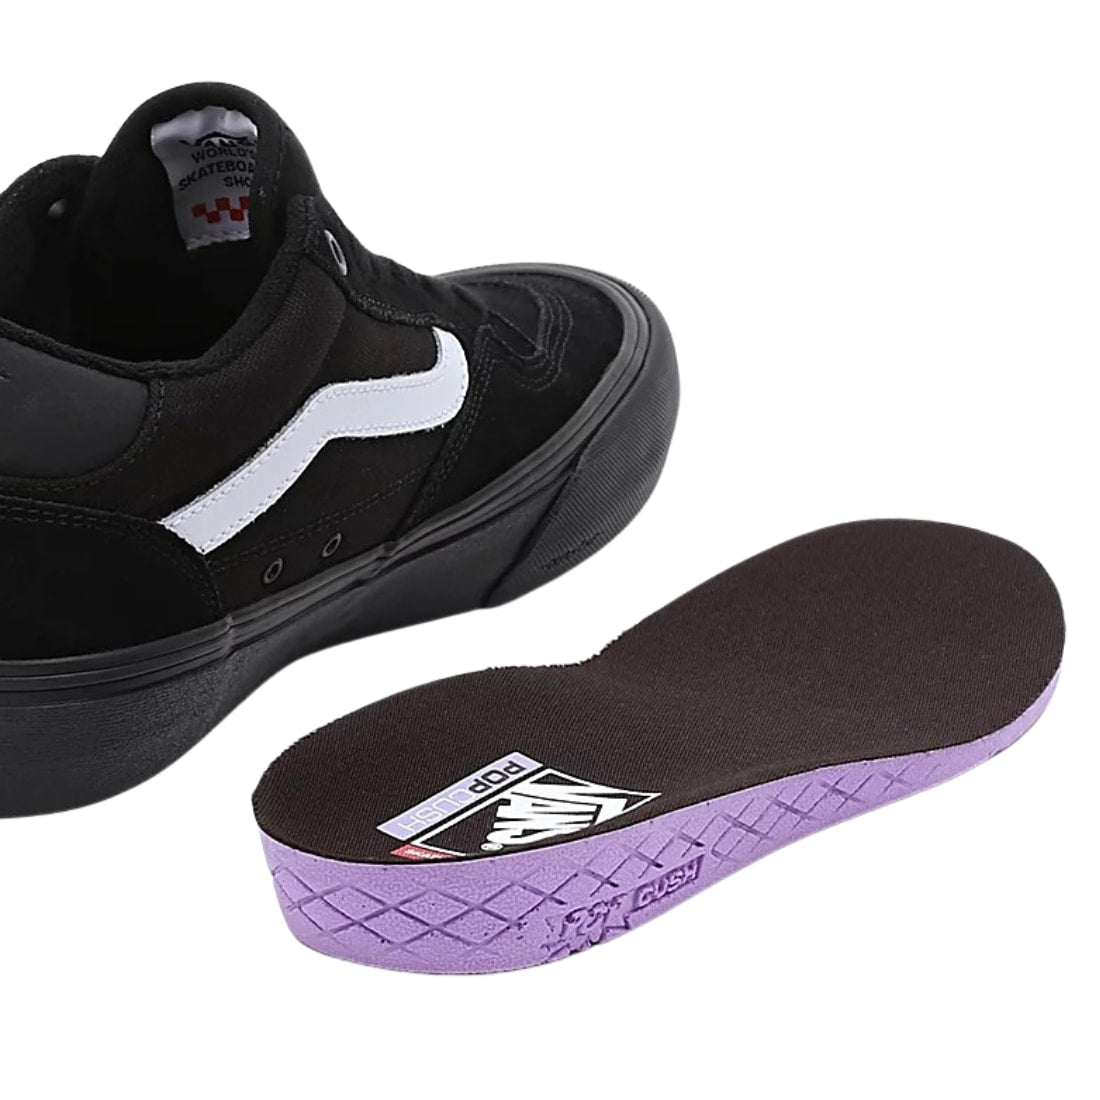 Vans Rowan Skate Shoes - Black/Black/White